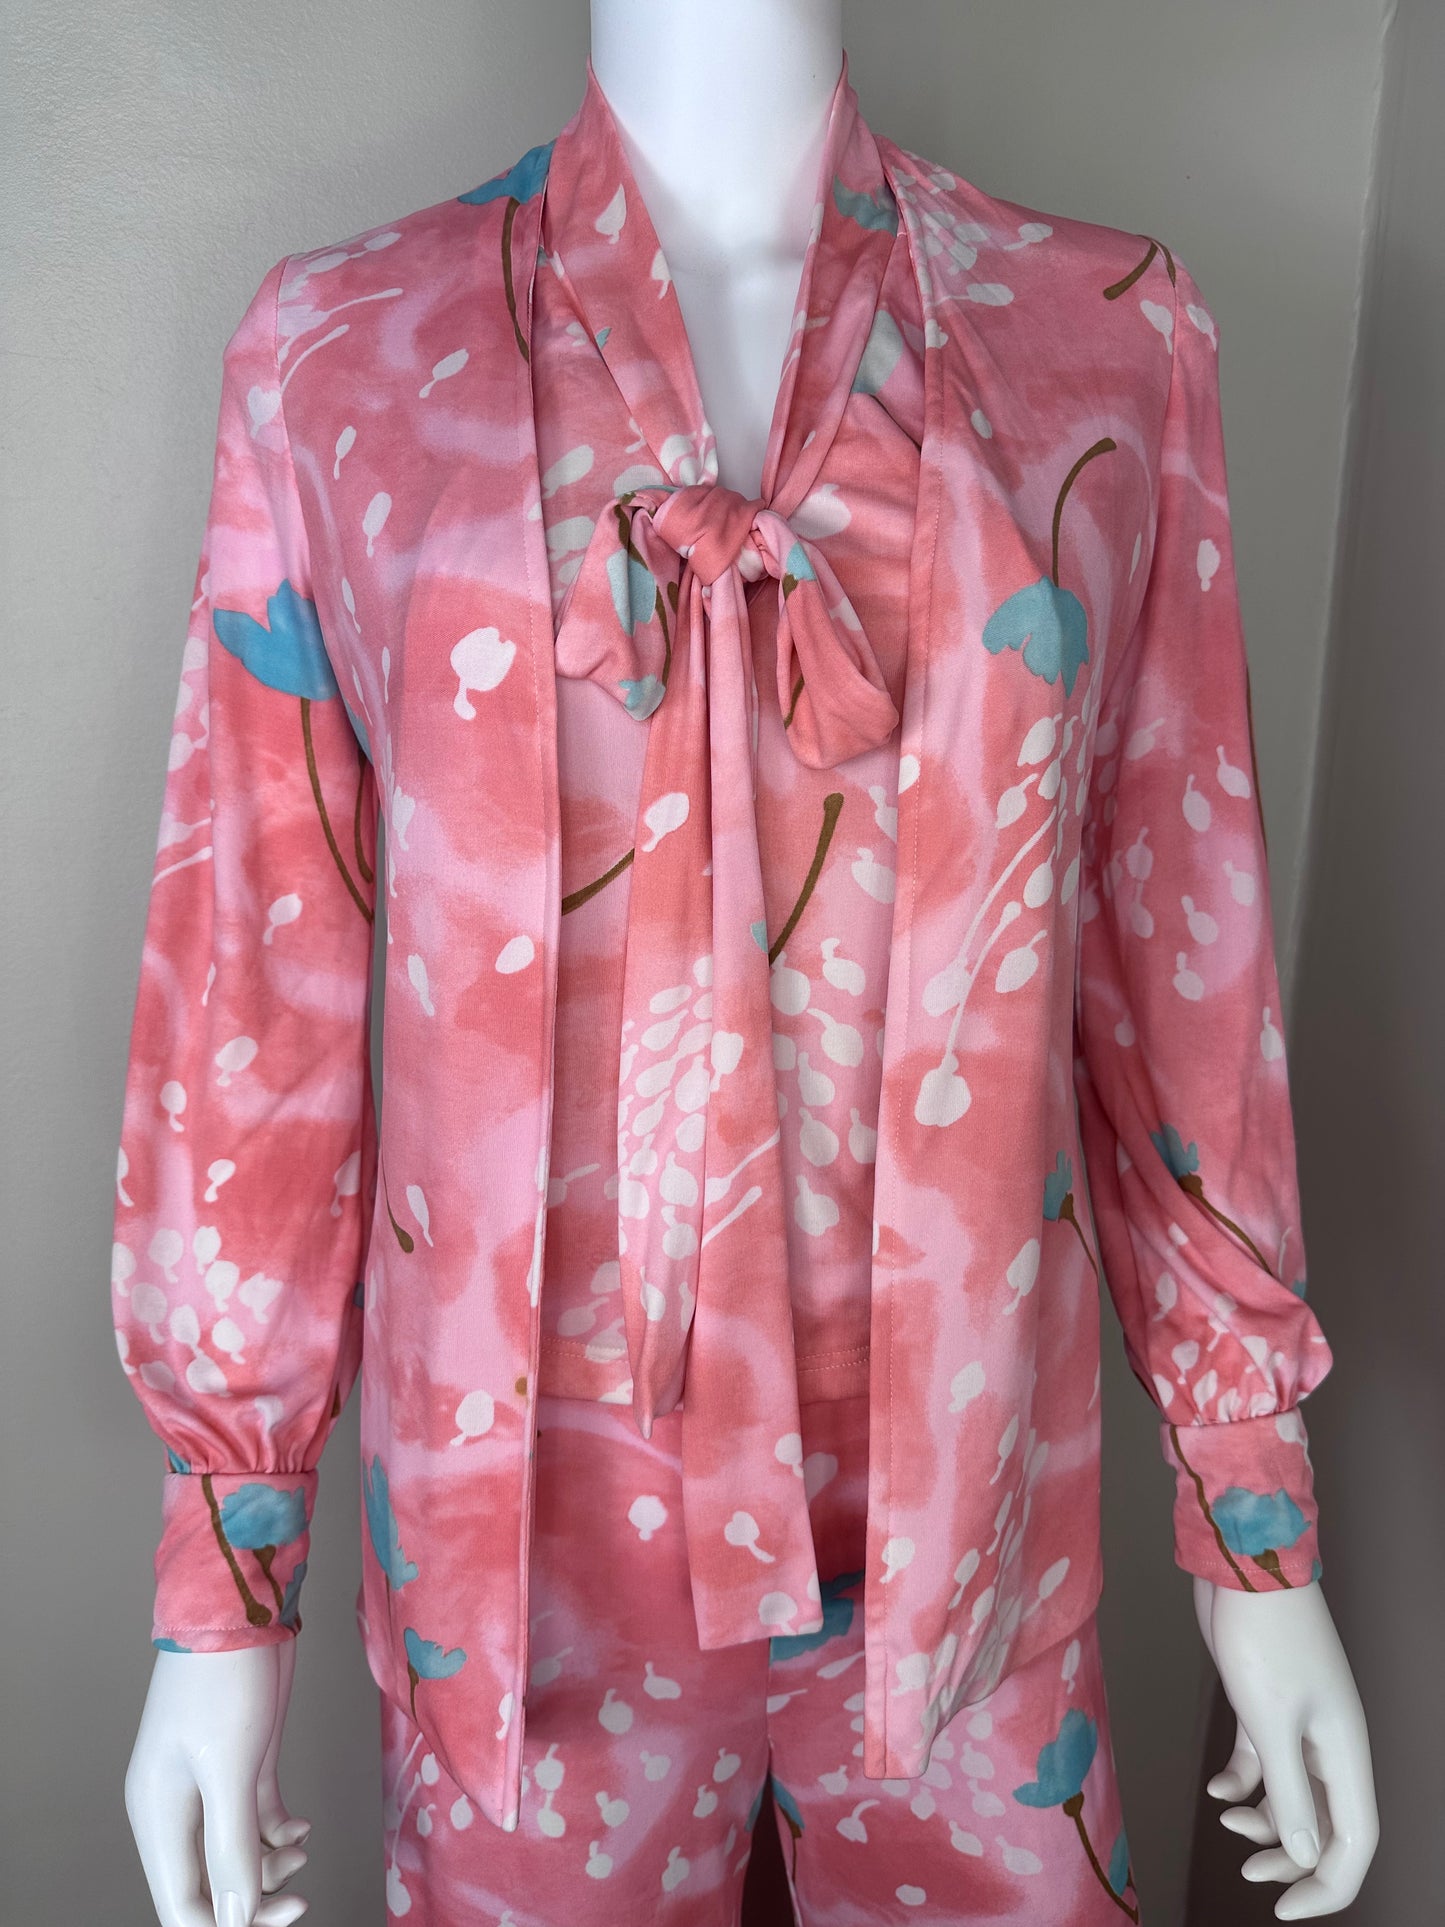 1970s Floral 3 Piece Set, Pant Suit, Leslie J Size Medium, Sleeveless Top, Long Sleeve Top